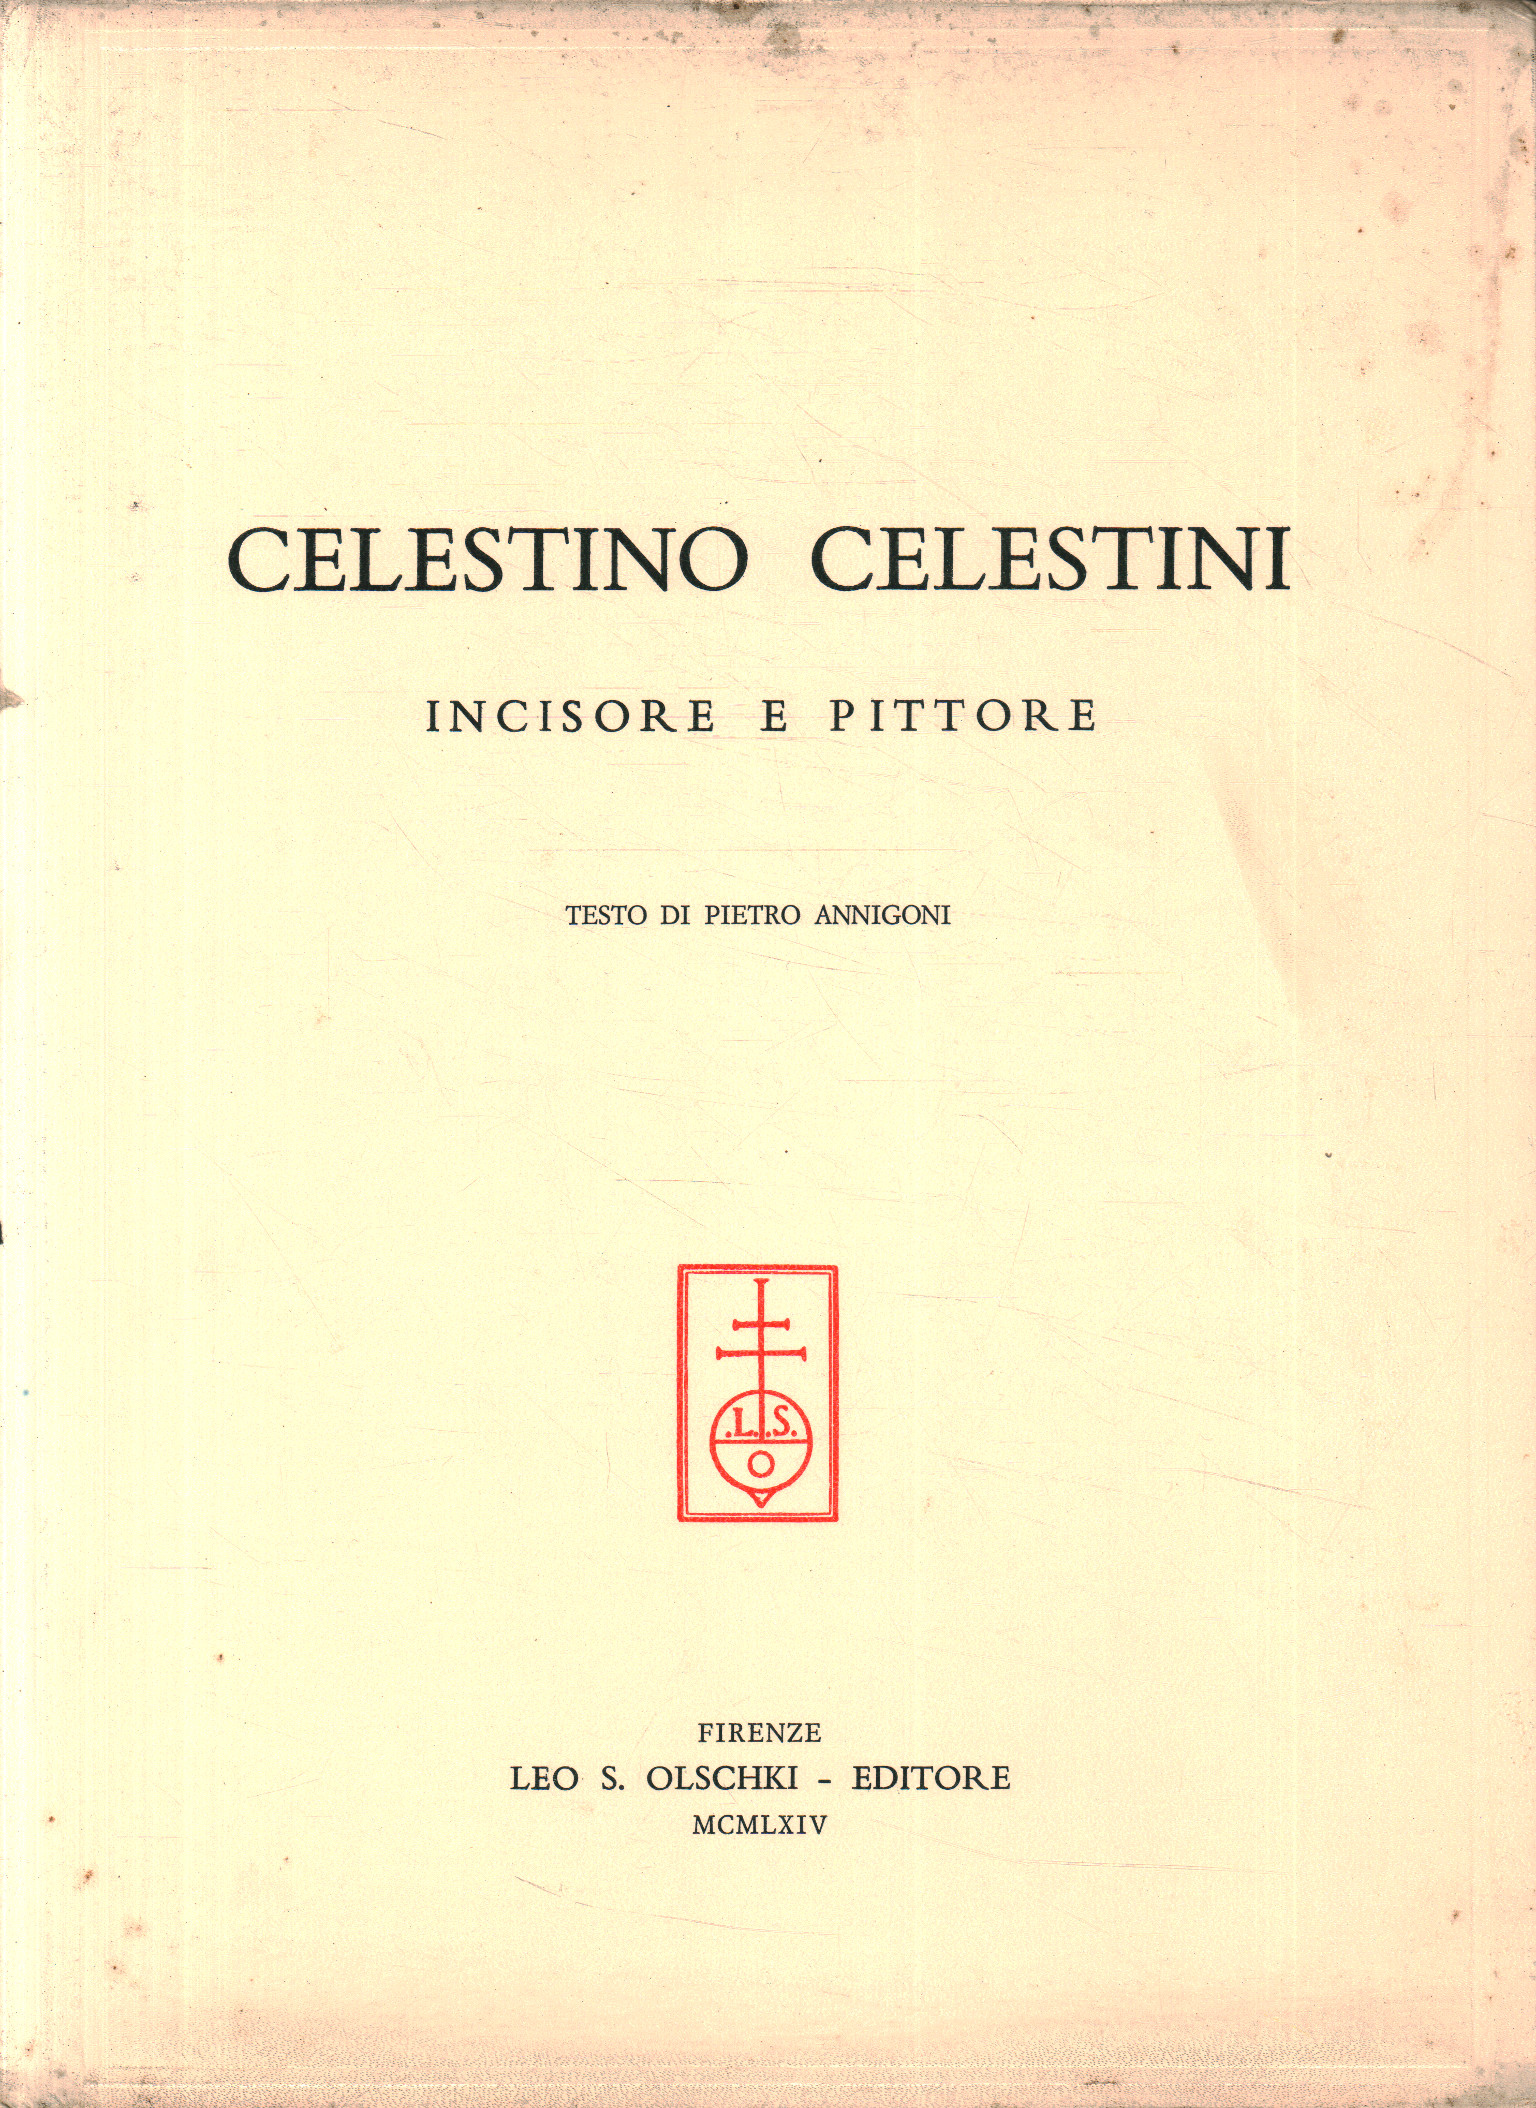 Celestino Celestini. Engraver and painter